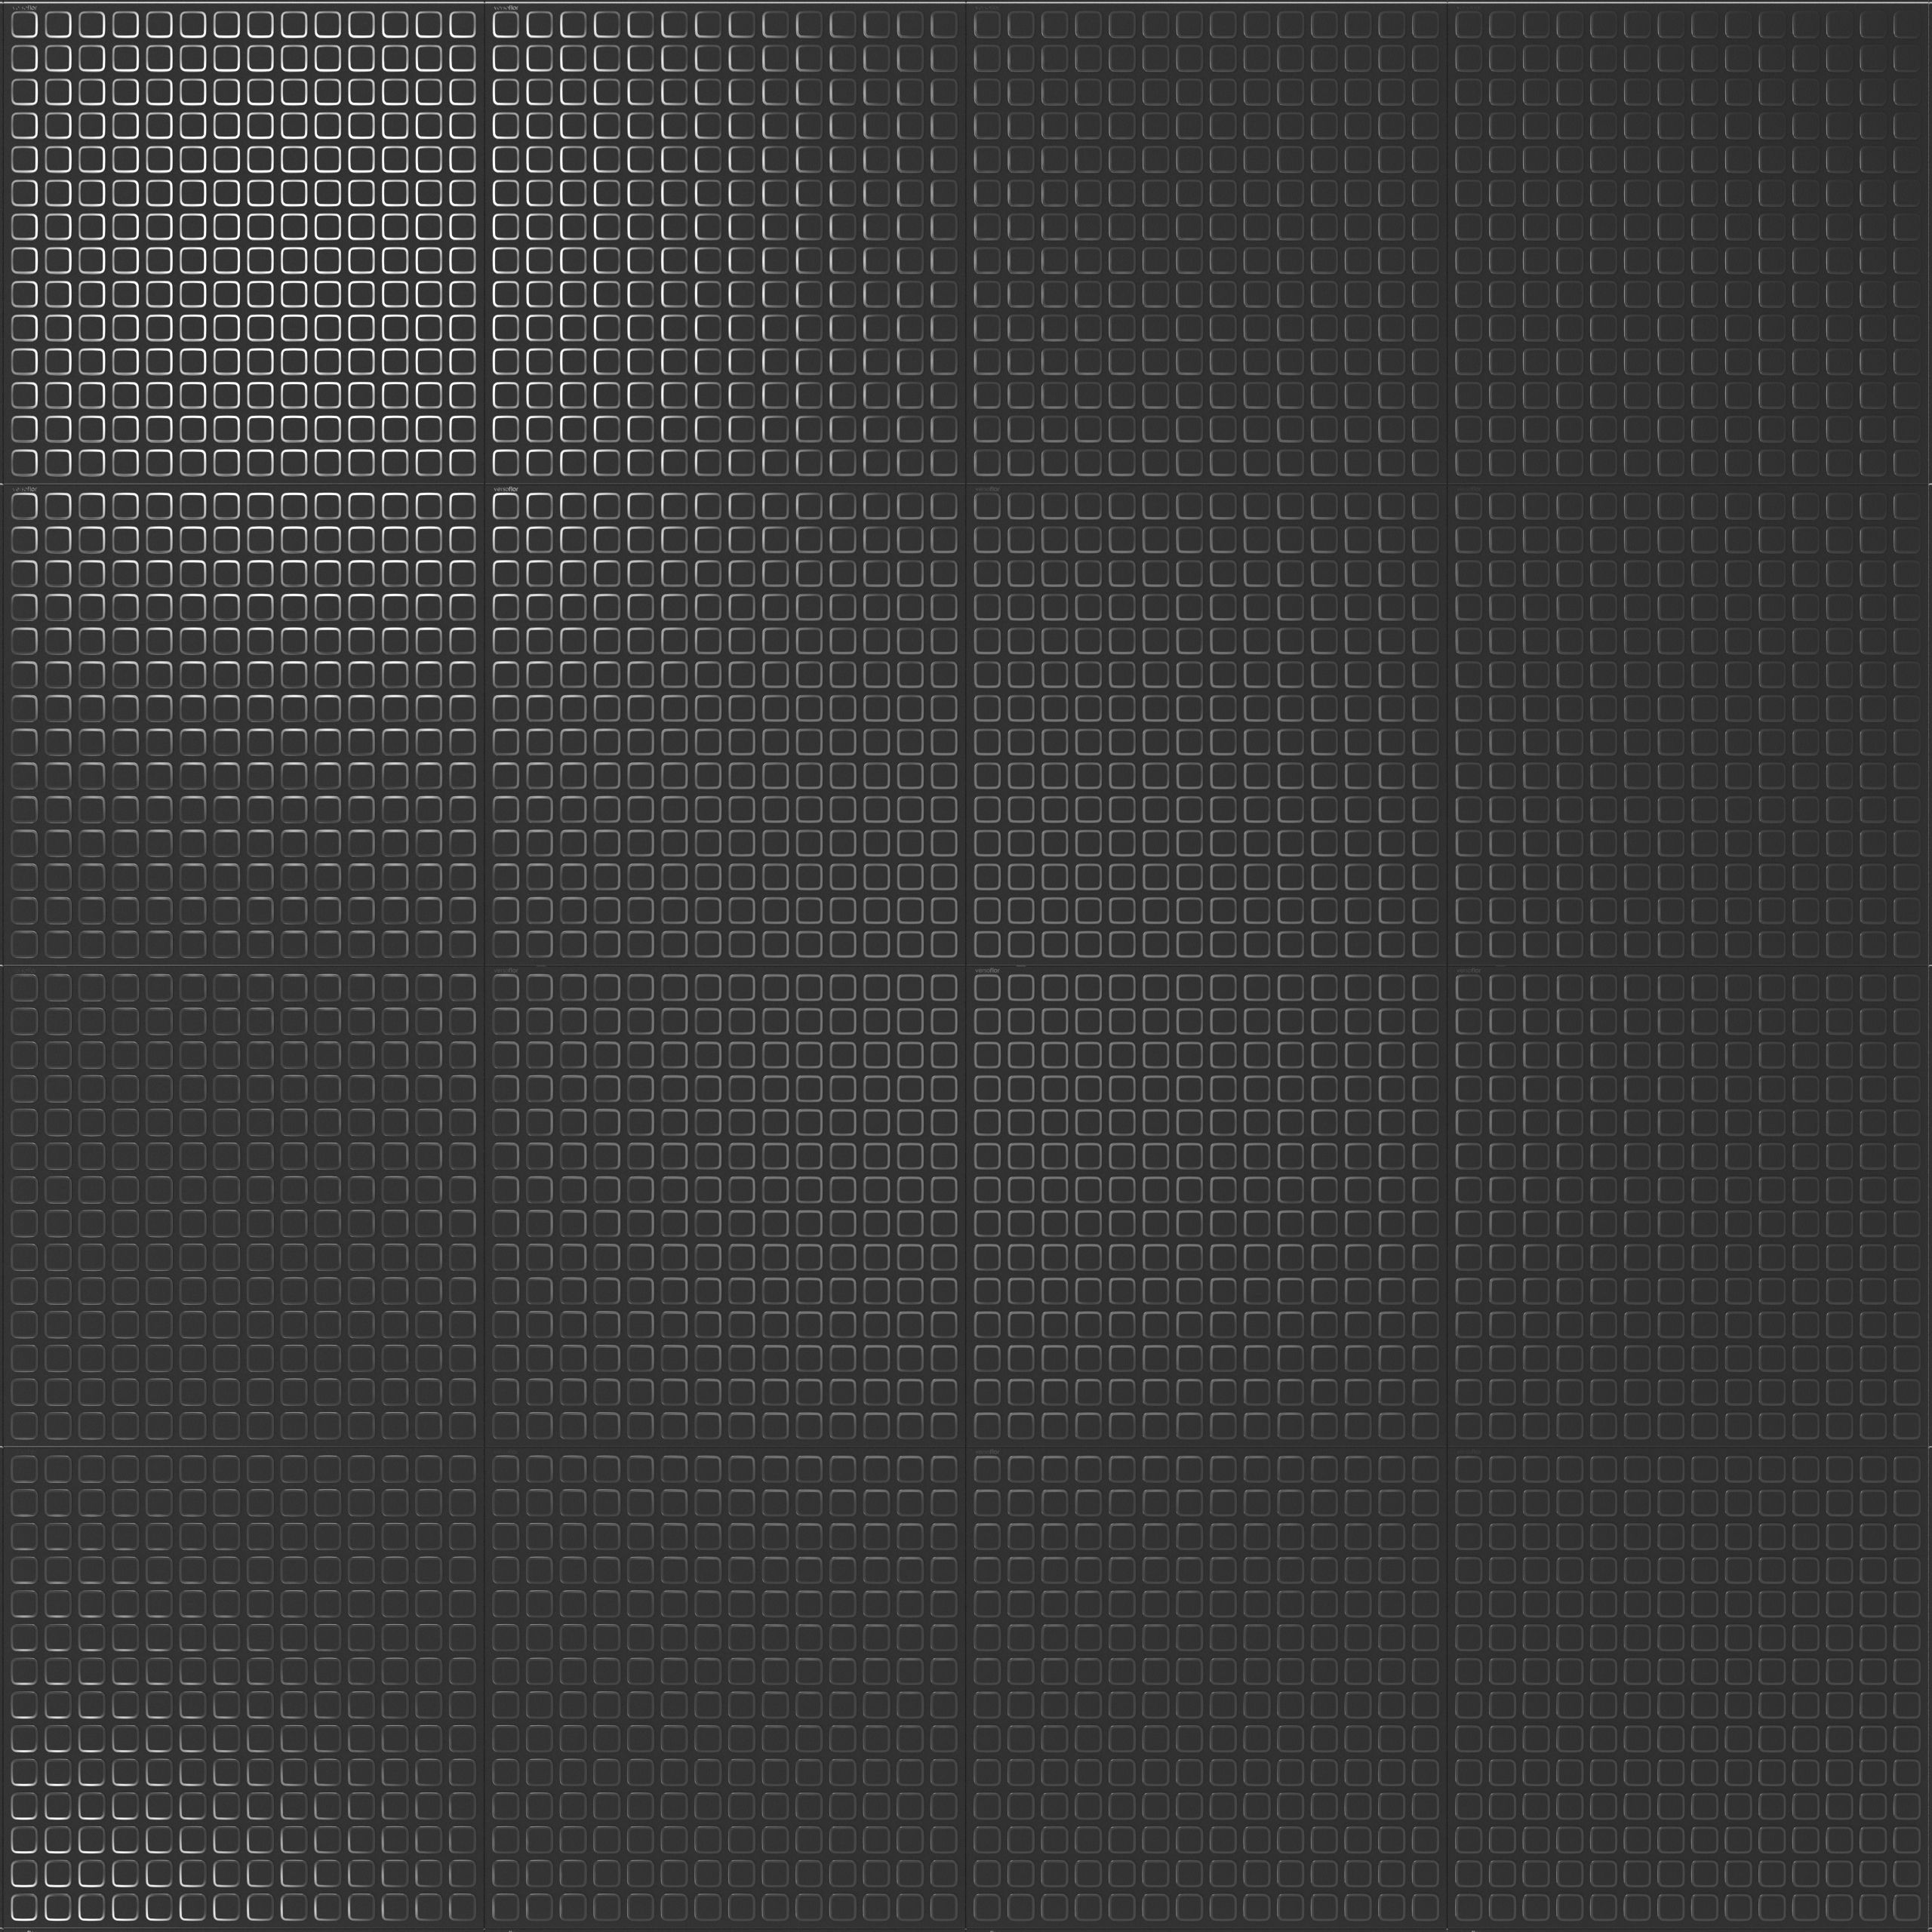 Versoflor Taskflor Graphite black Interlocking floor tile 1m², Pack of 9